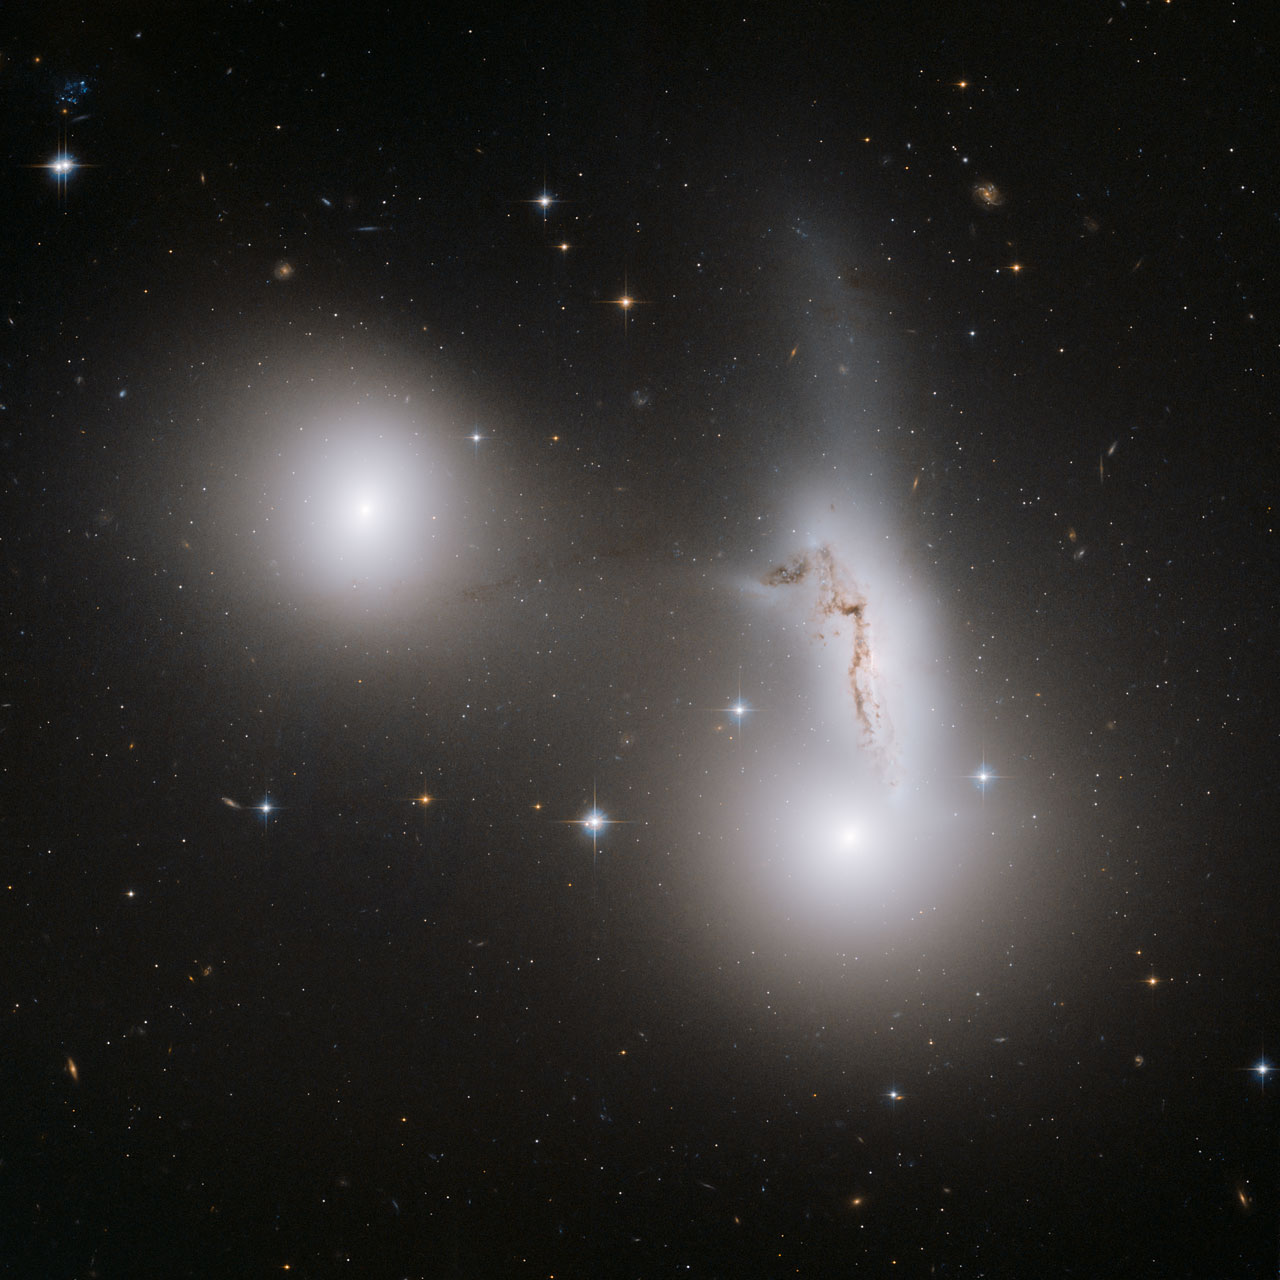 Hickson Compact Group 90 (interacting galaxies)